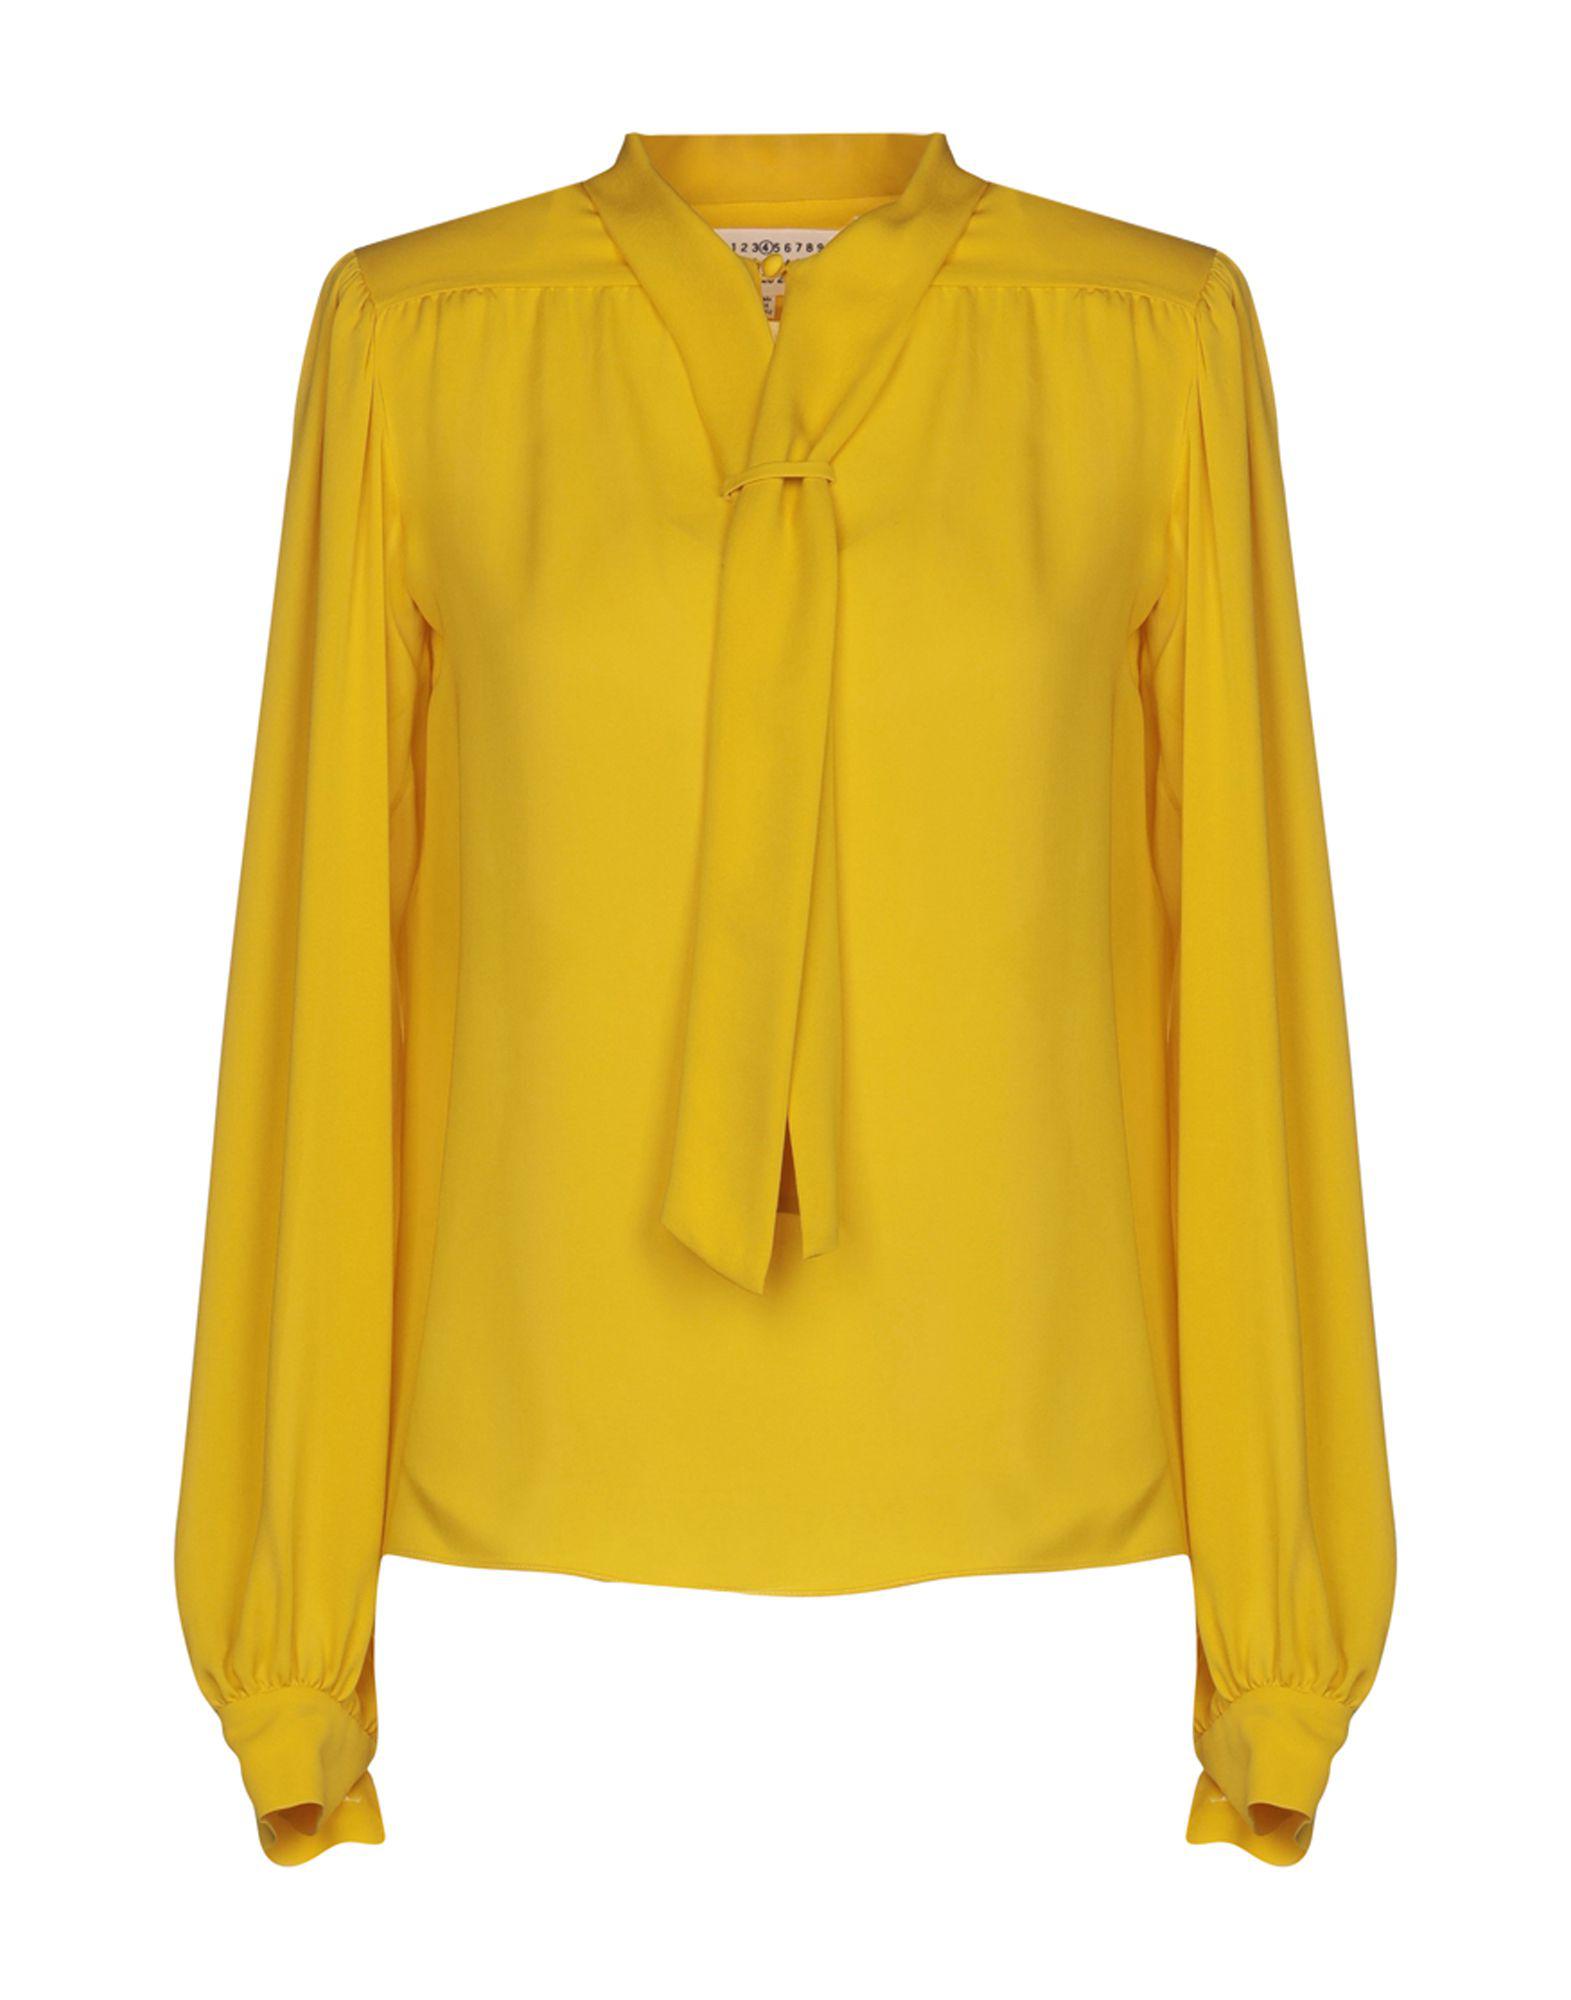 Maison Margiela Silk Shirt in Yellow & Orange (Yellow) - Lyst